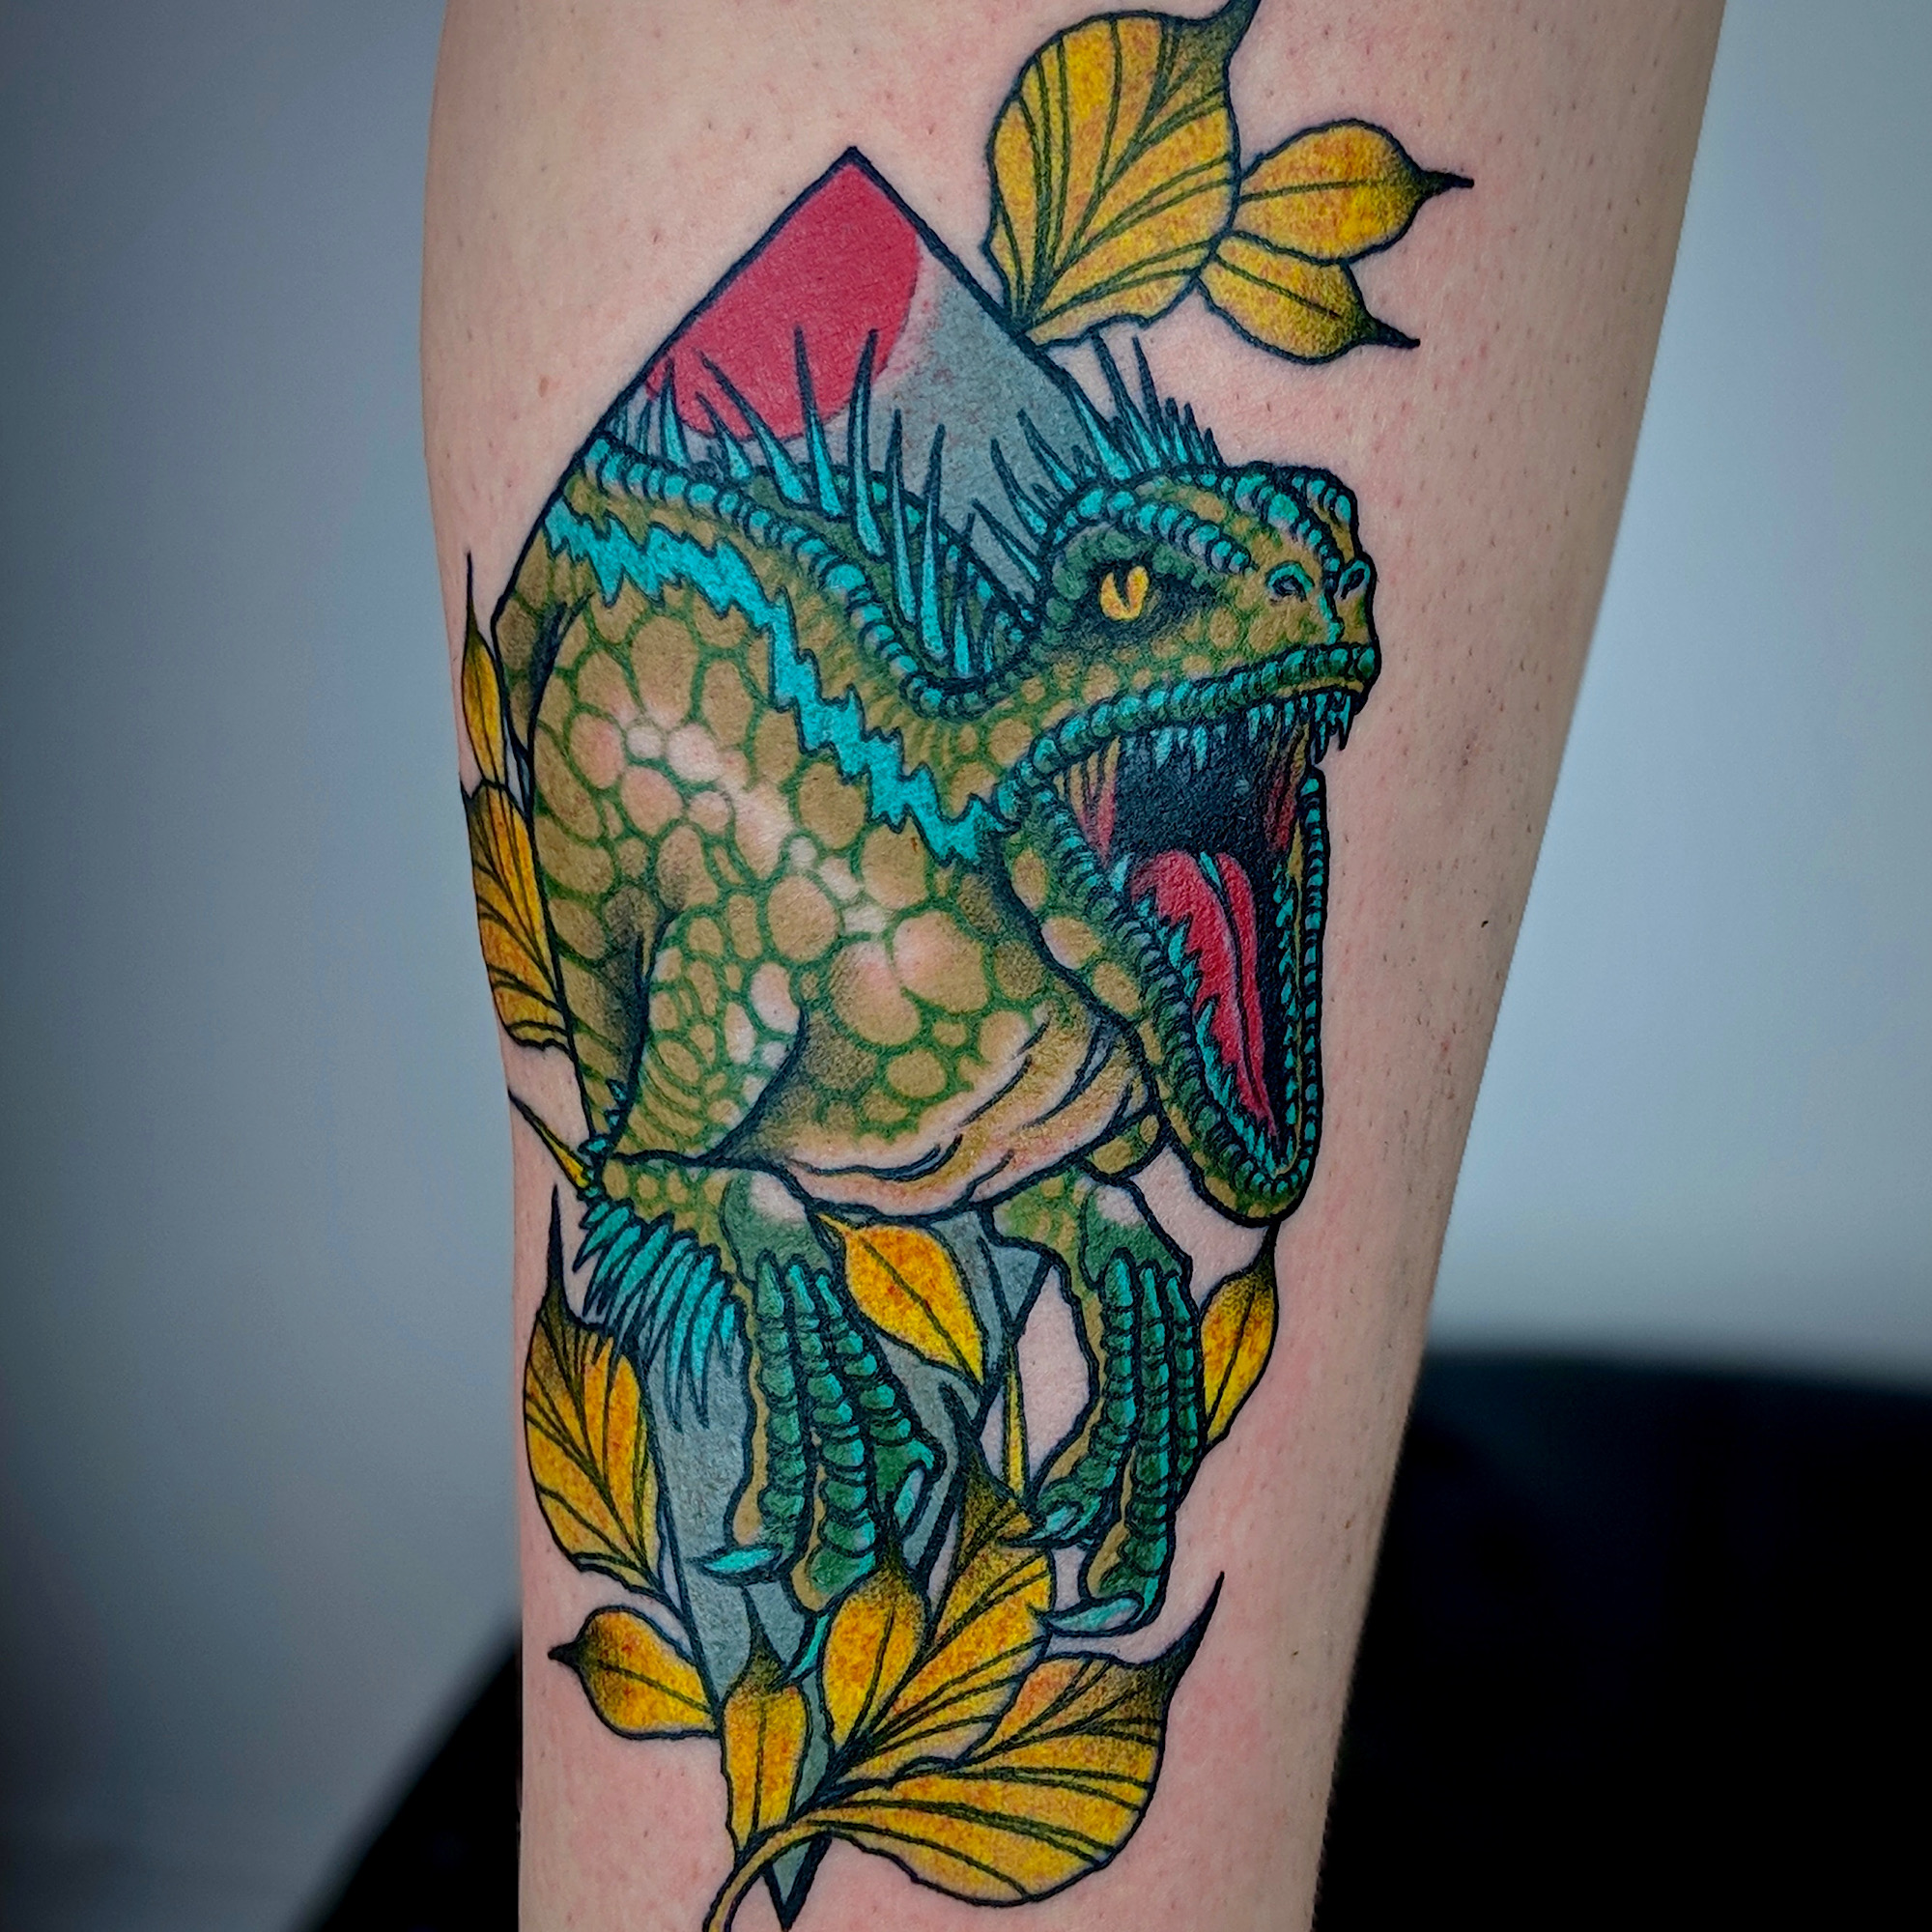 Neo traditional colour tattoo velociraptor dinosaur Jurassic Park by ricks custom tattooing Ricardo Pedro